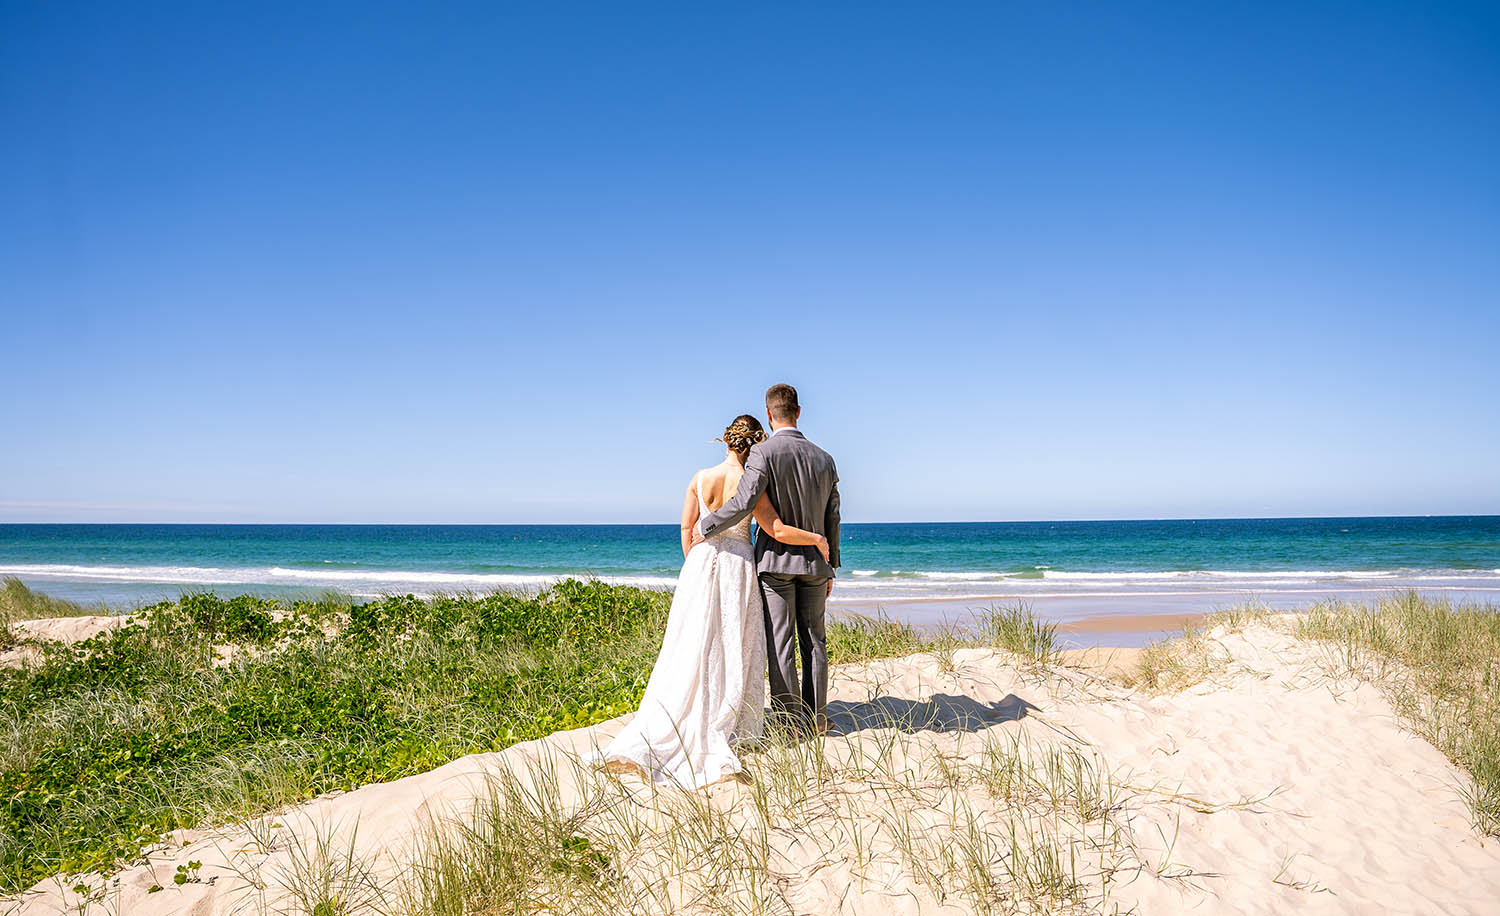 Wedding Photography - Couple on beach